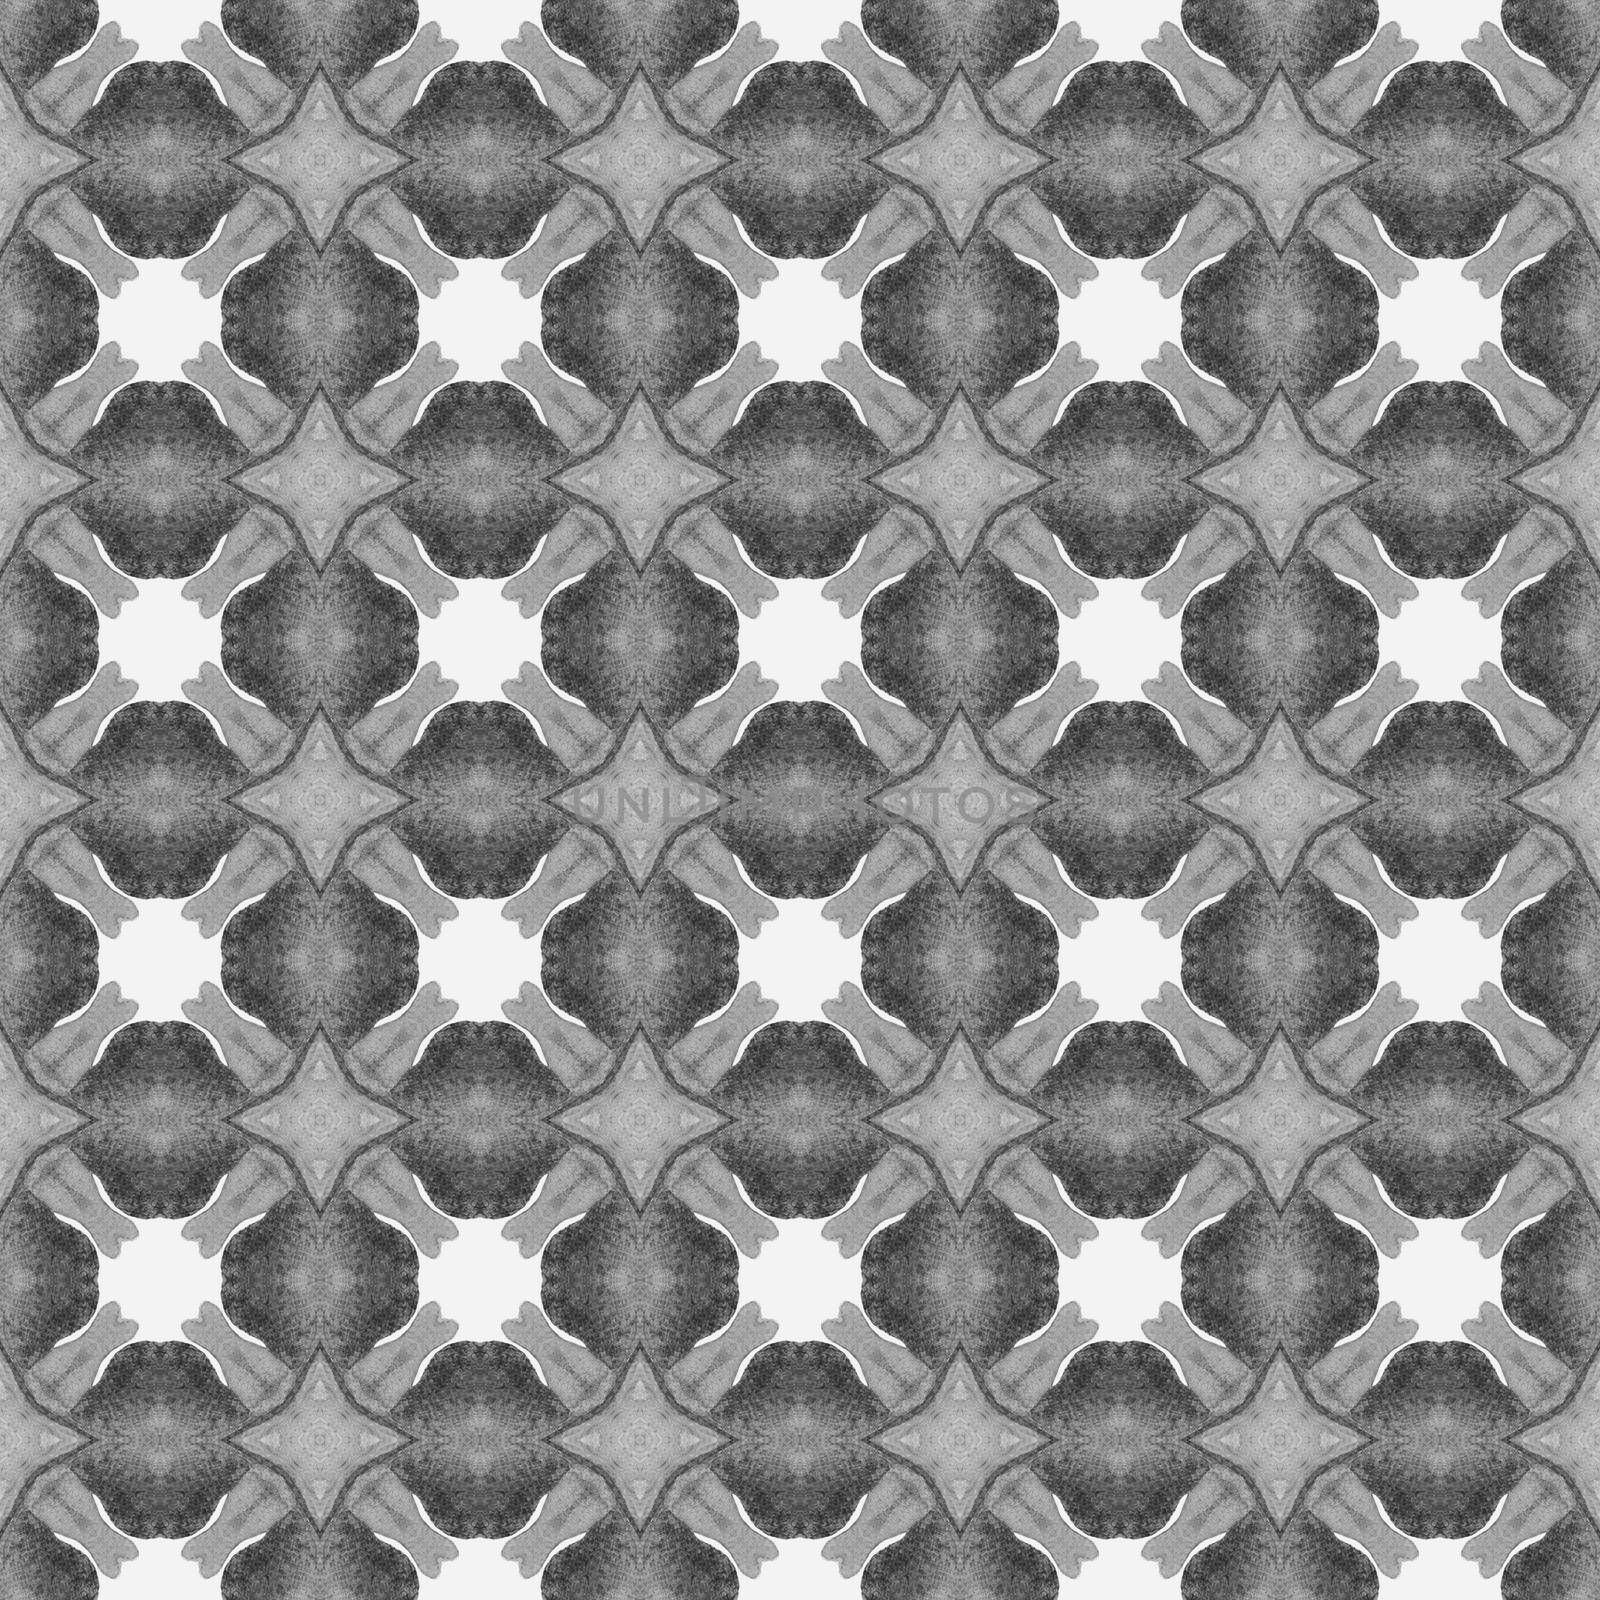 Watercolor ikat repeating tile border. Black and by beginagain